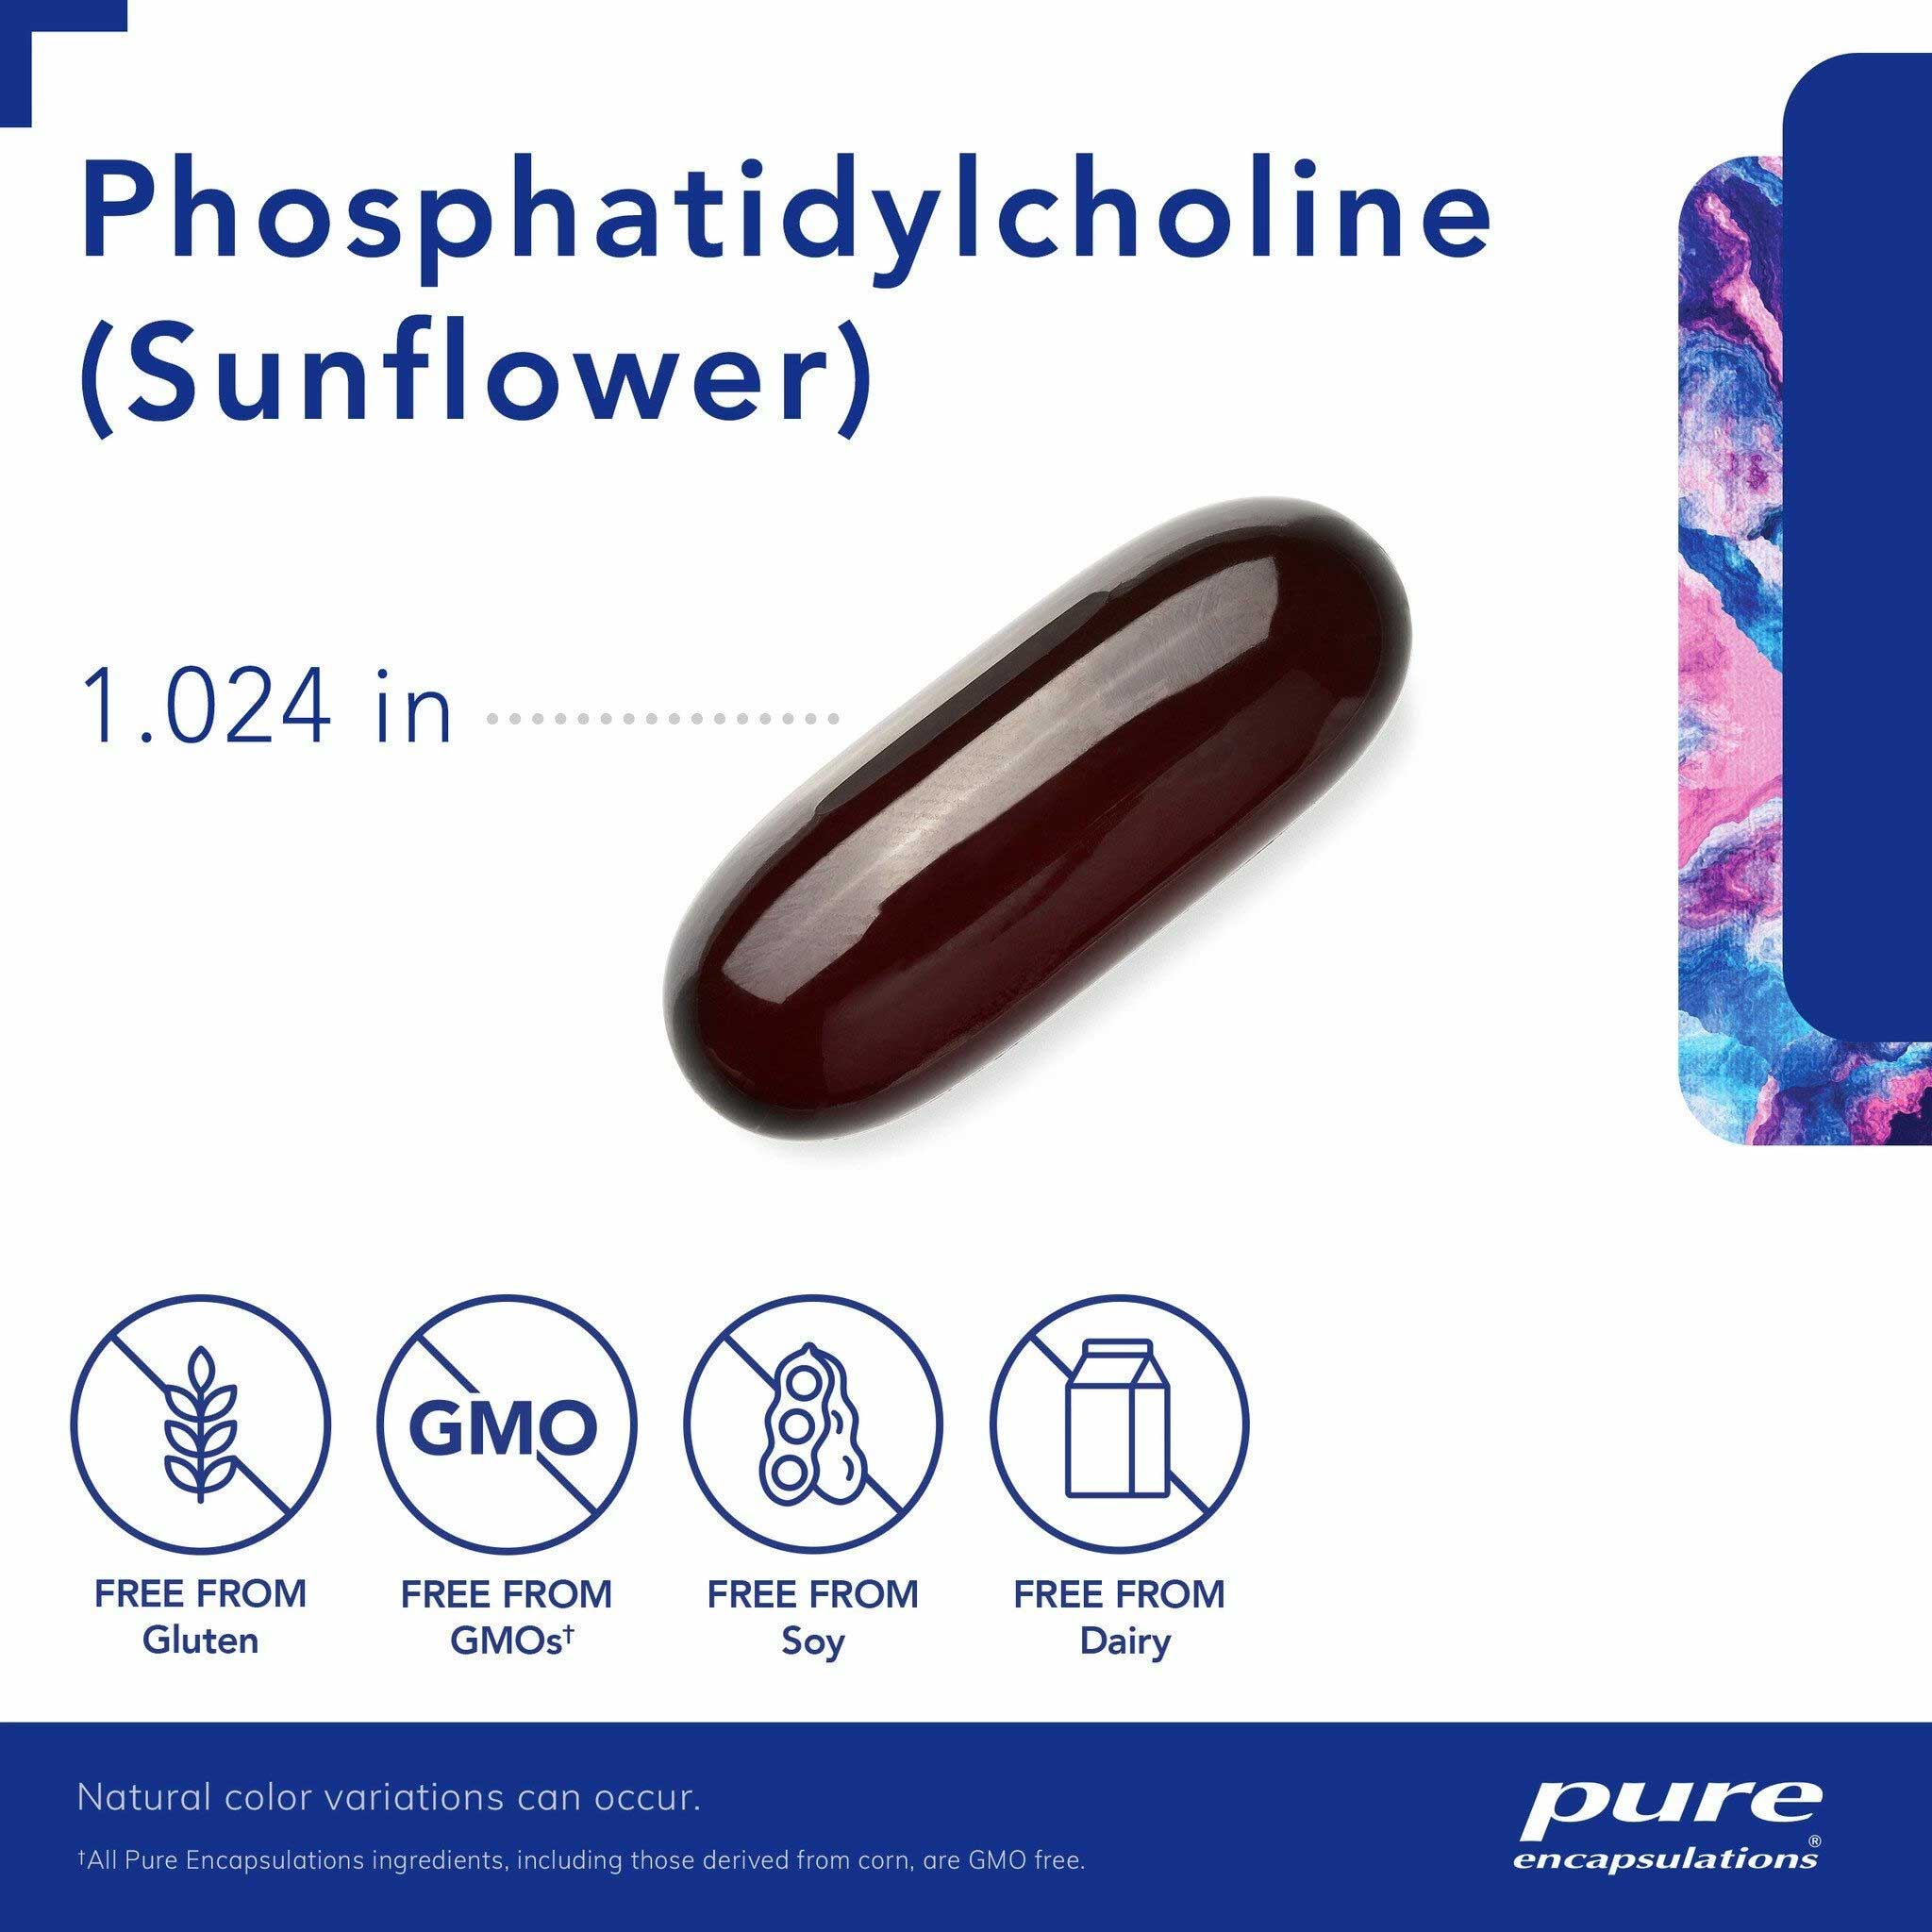 Pure Encapsulations Phosphatidylcholine (sunflower) Softgels Capsules